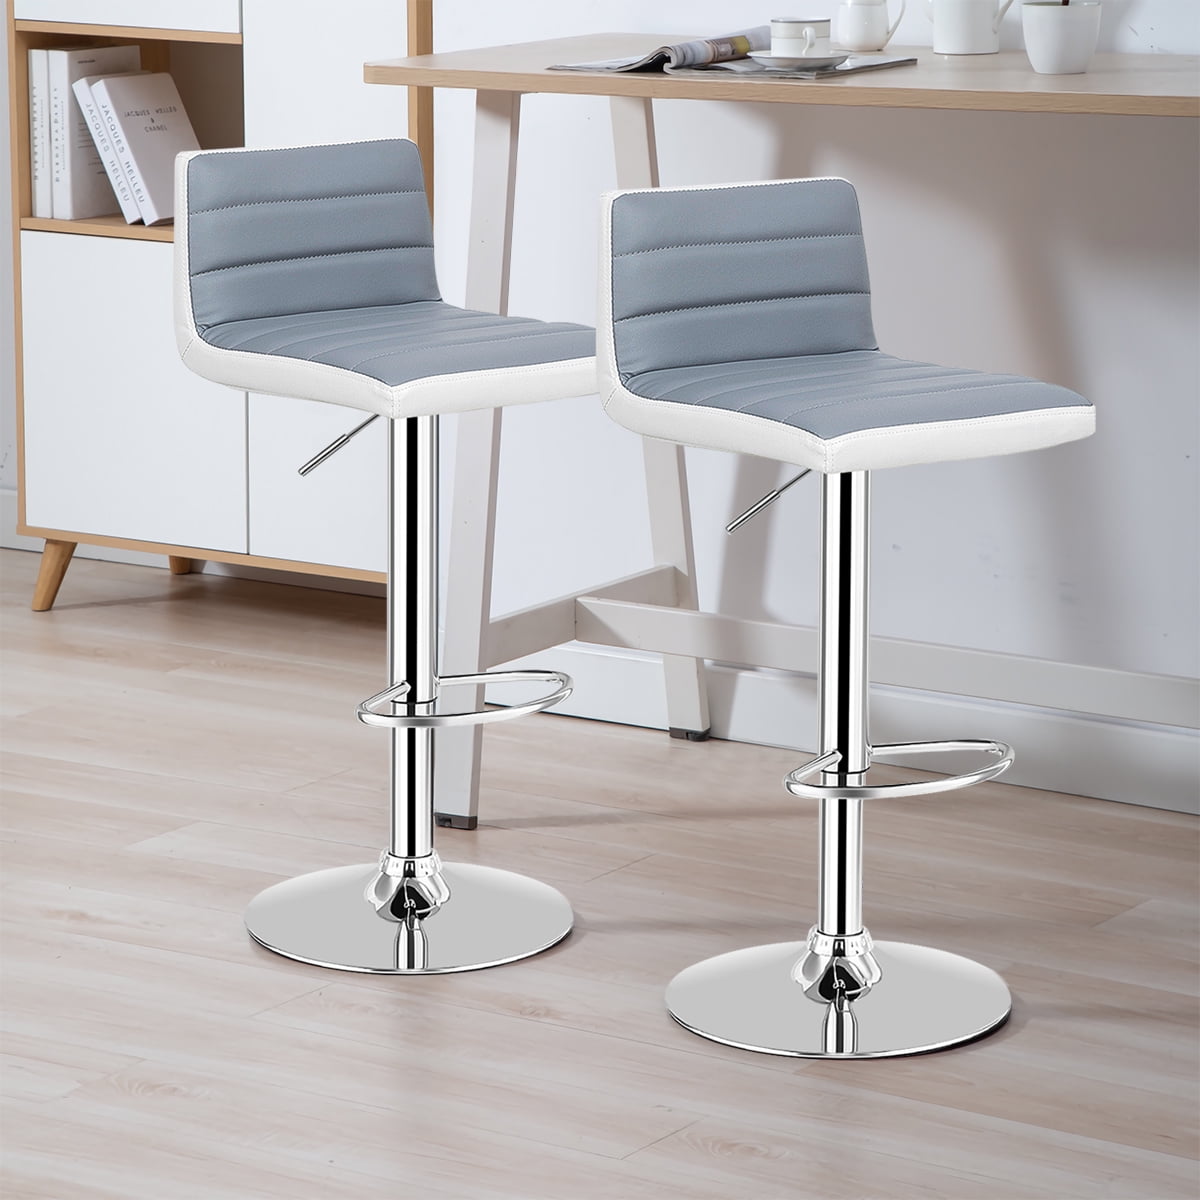 2× Cream Bar Stools Swivel Kitchen Breakfast Bar Stool Chair PU Leather Gas Lift 